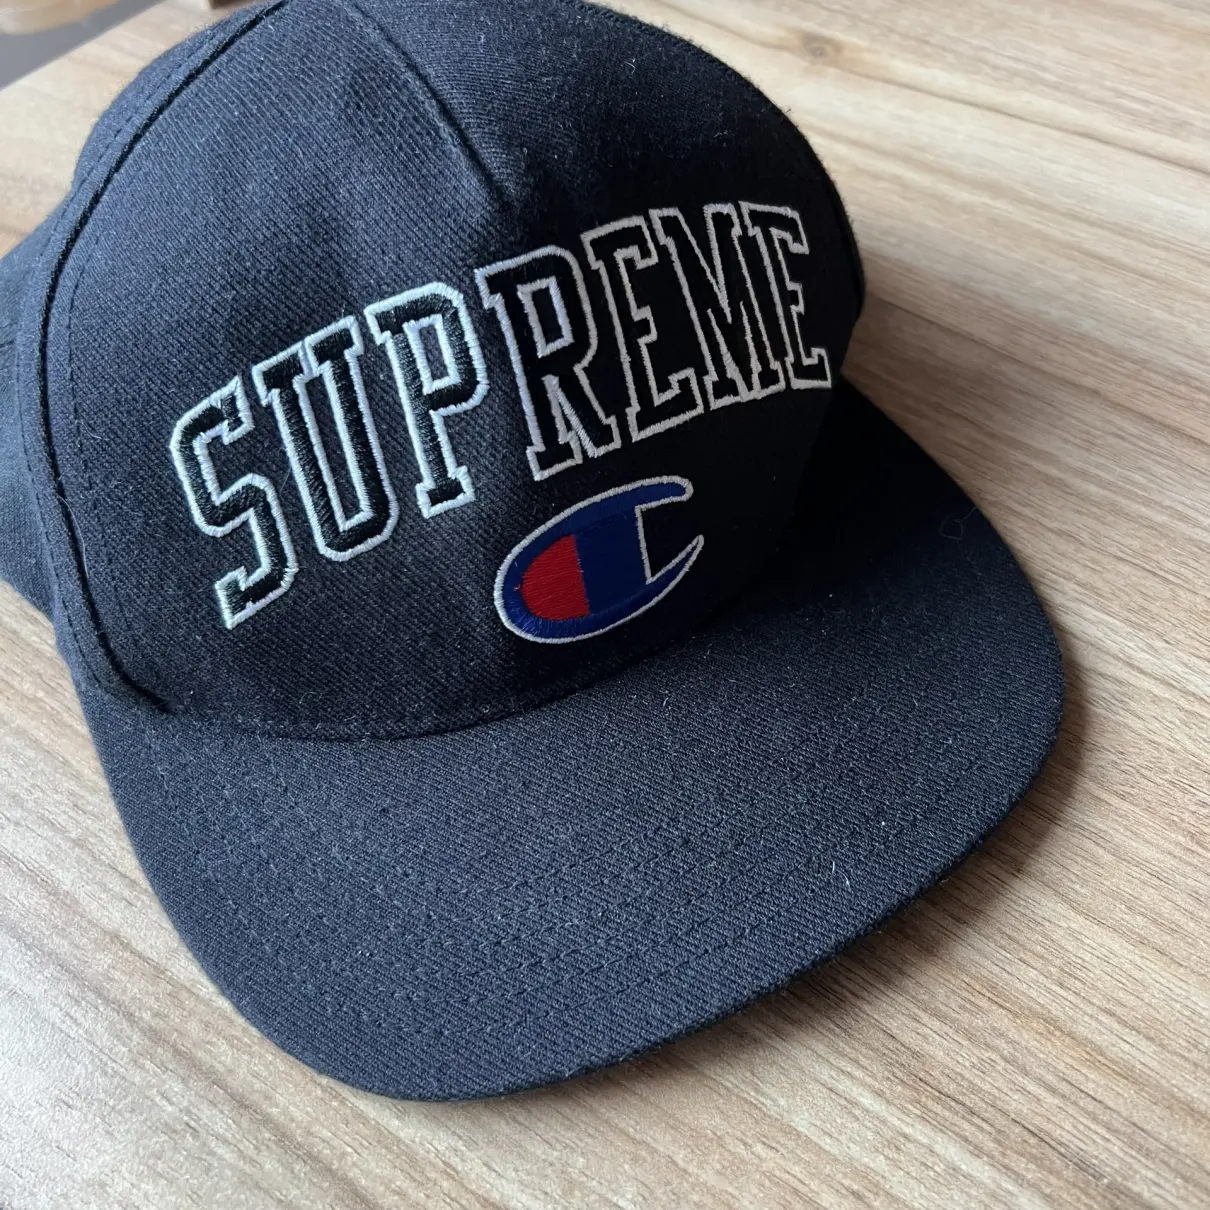 Buy Supreme x Champion Hat online